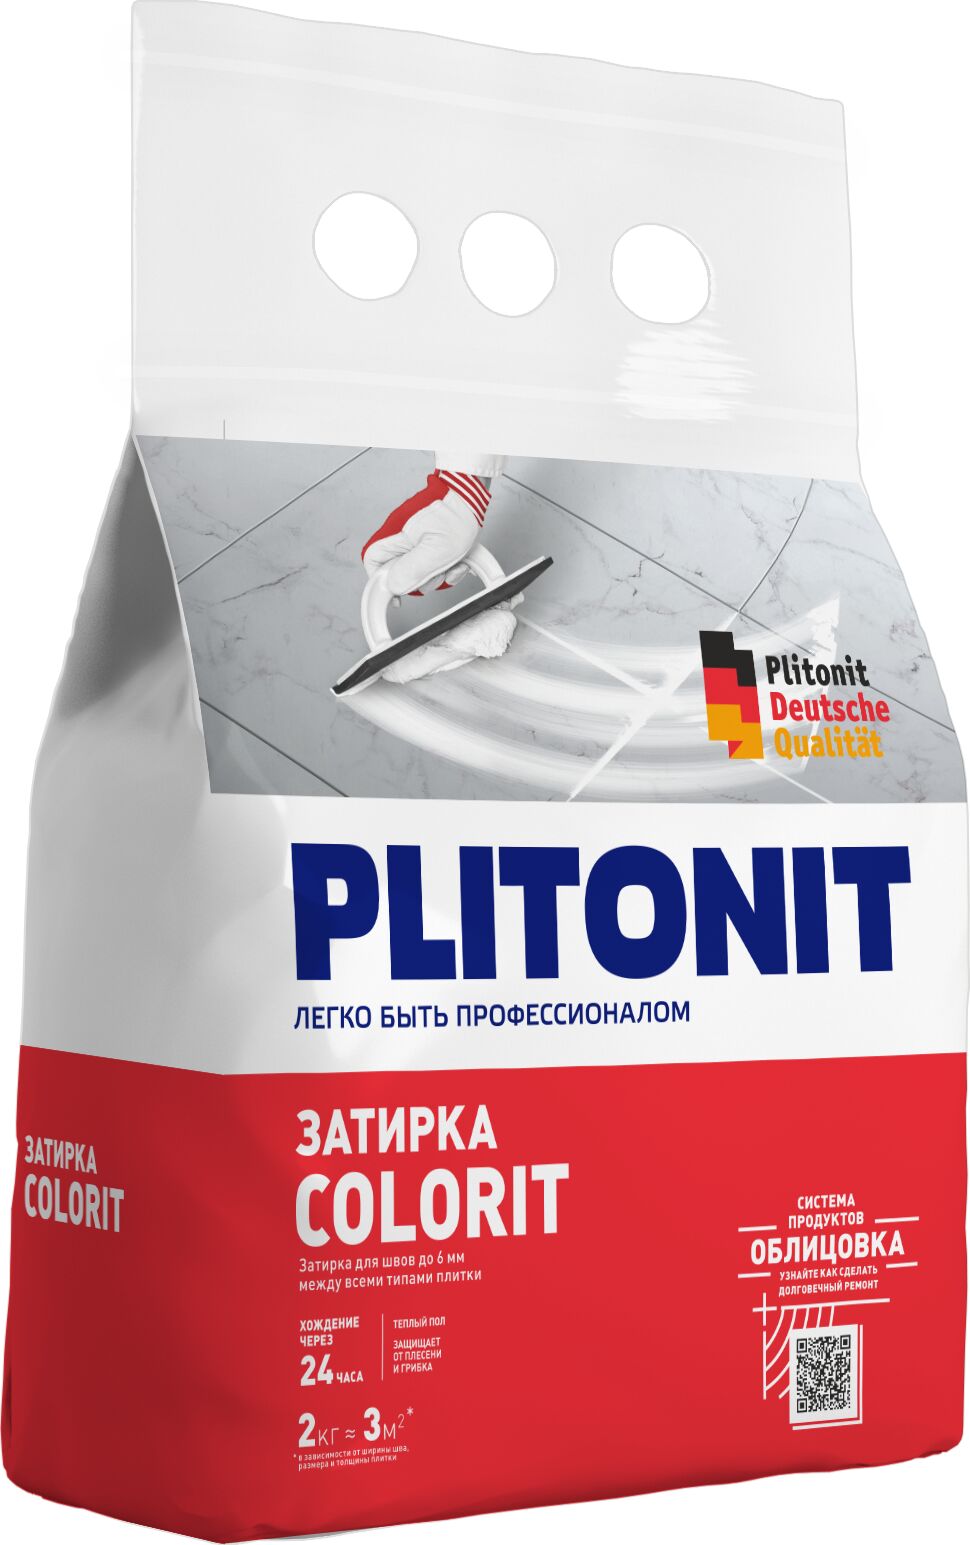 PLITONIT Colorit затирка между всеми типами плитки (1,5-6 мм) КОРИЧНЕВАЯ -2 , PLITONIT Colorit затирка между всеми типами плитки (1,5-6 мм) КОРИЧНЕВАЯ -2 